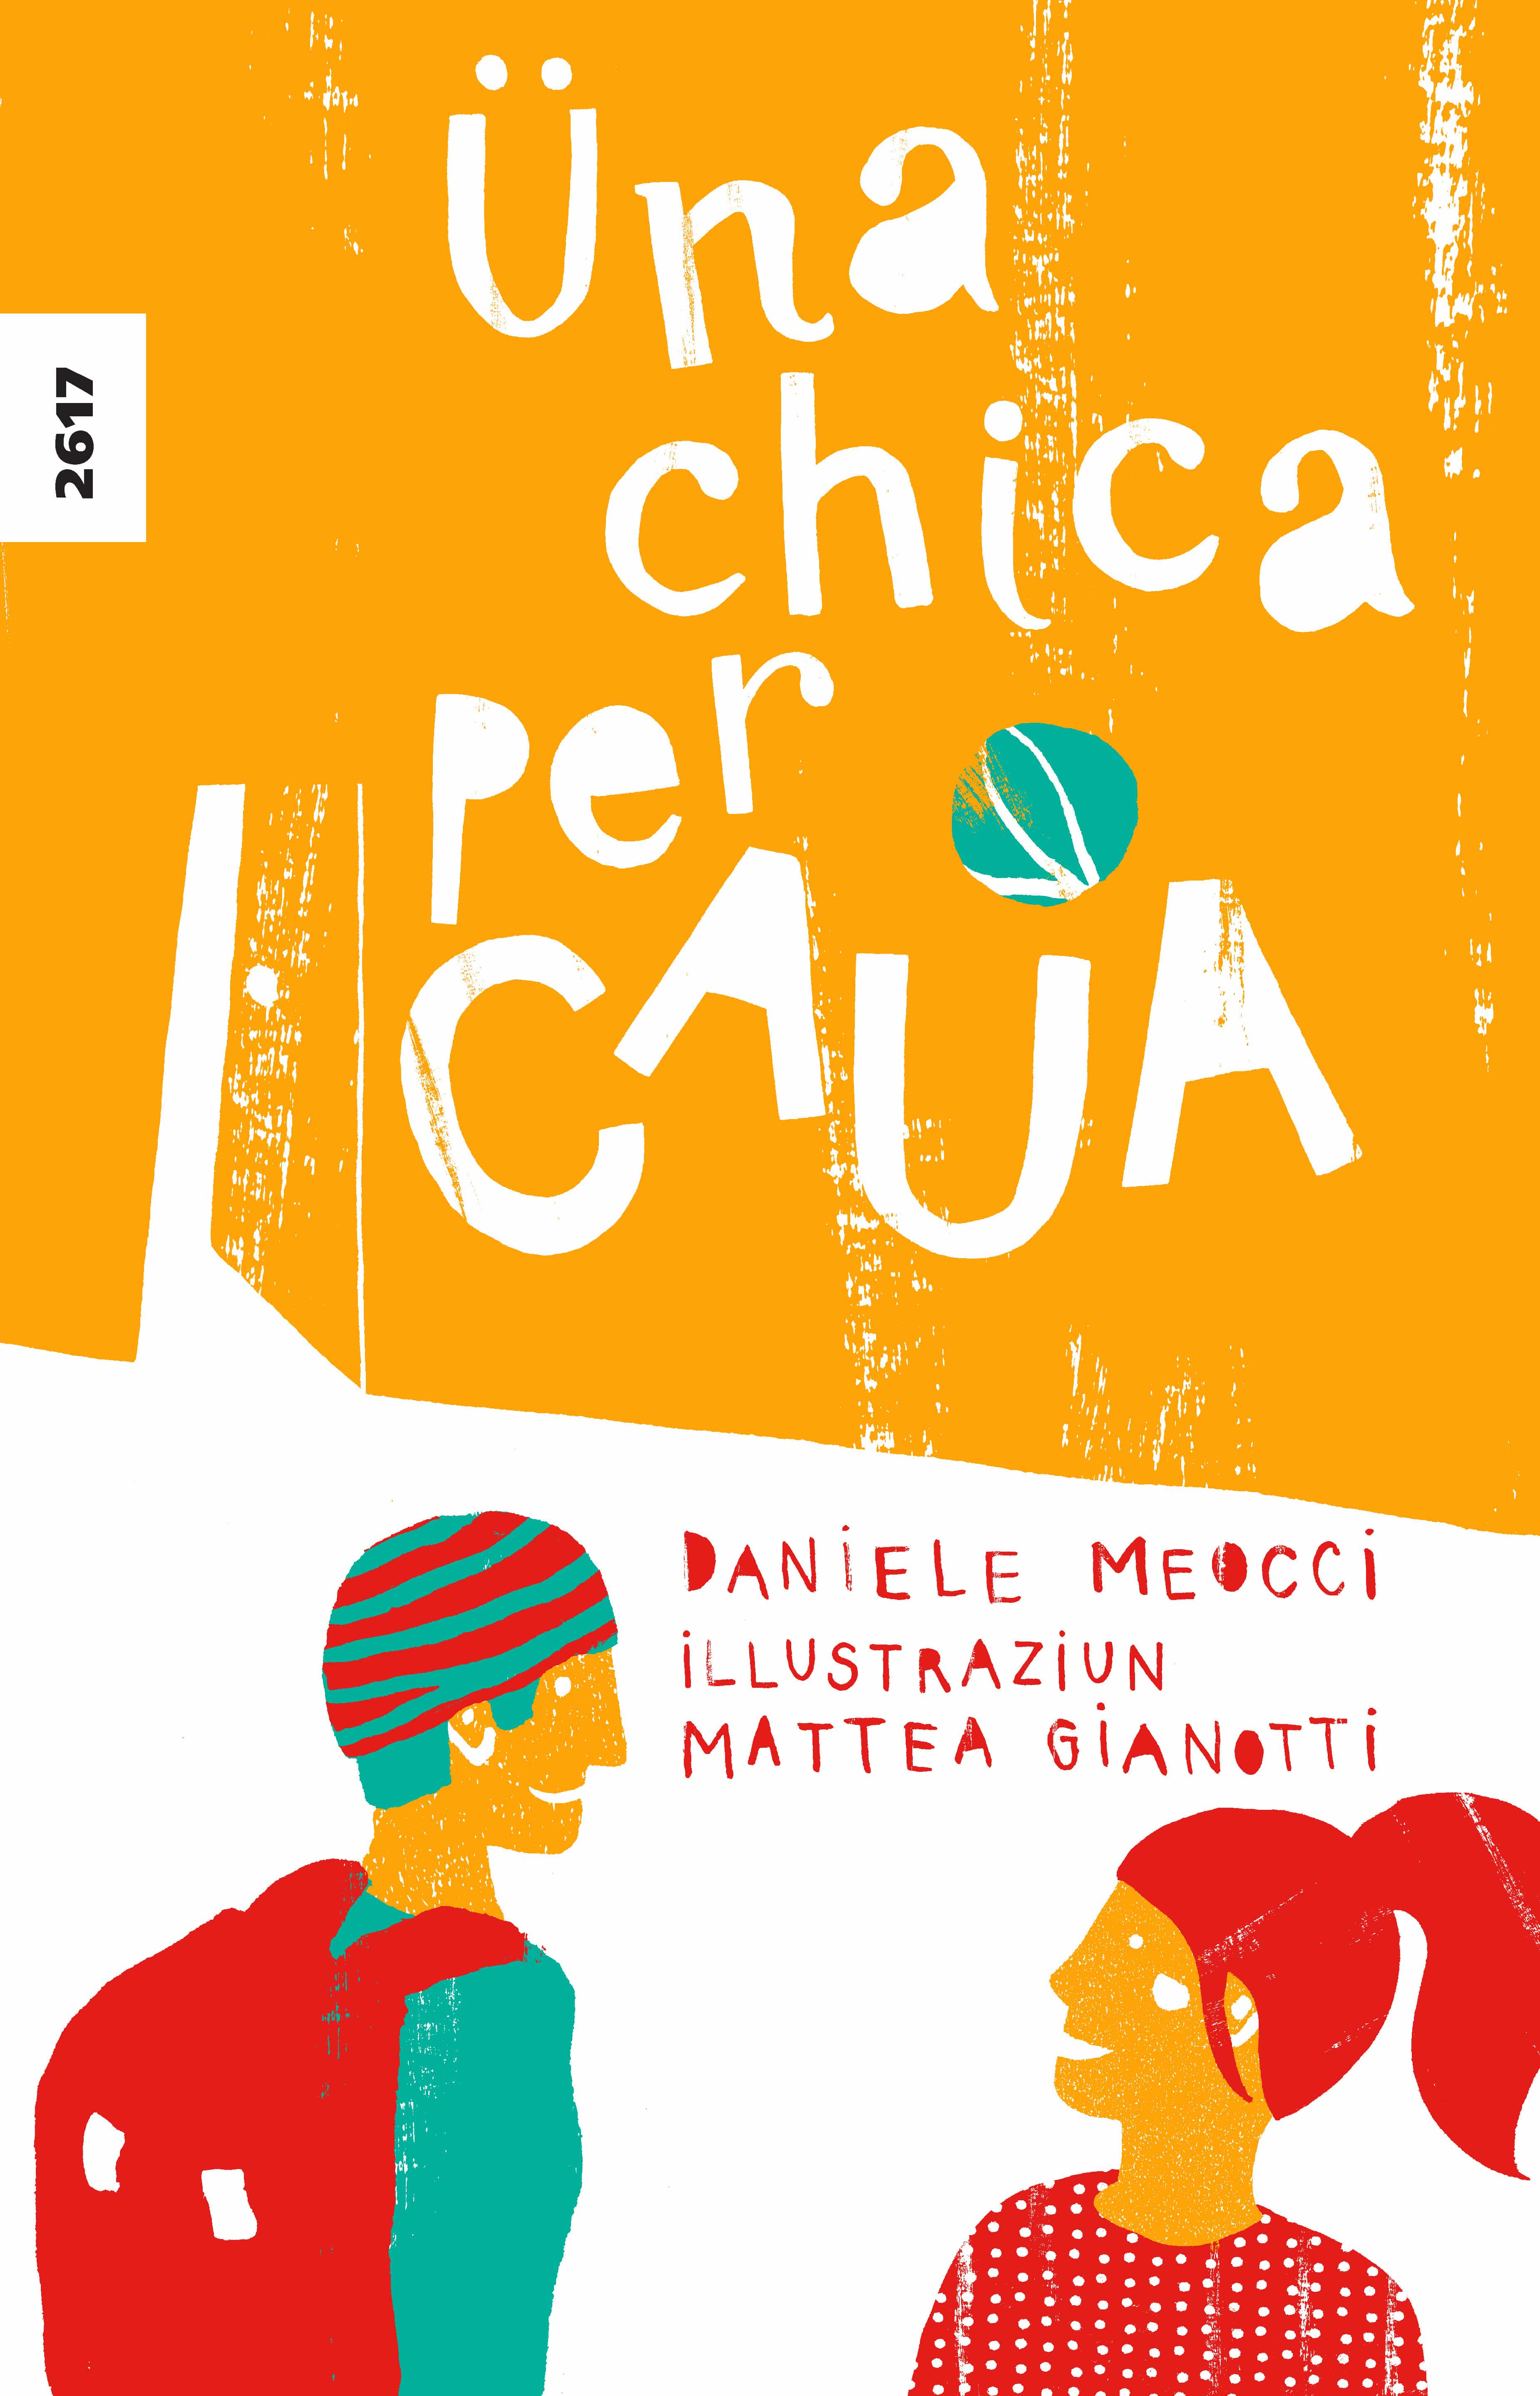 Uena chica per Caua, ein Kinderbuch von Daniele Meocci, Illustration von Mattea Gianotti, SJW Verlag, Migration